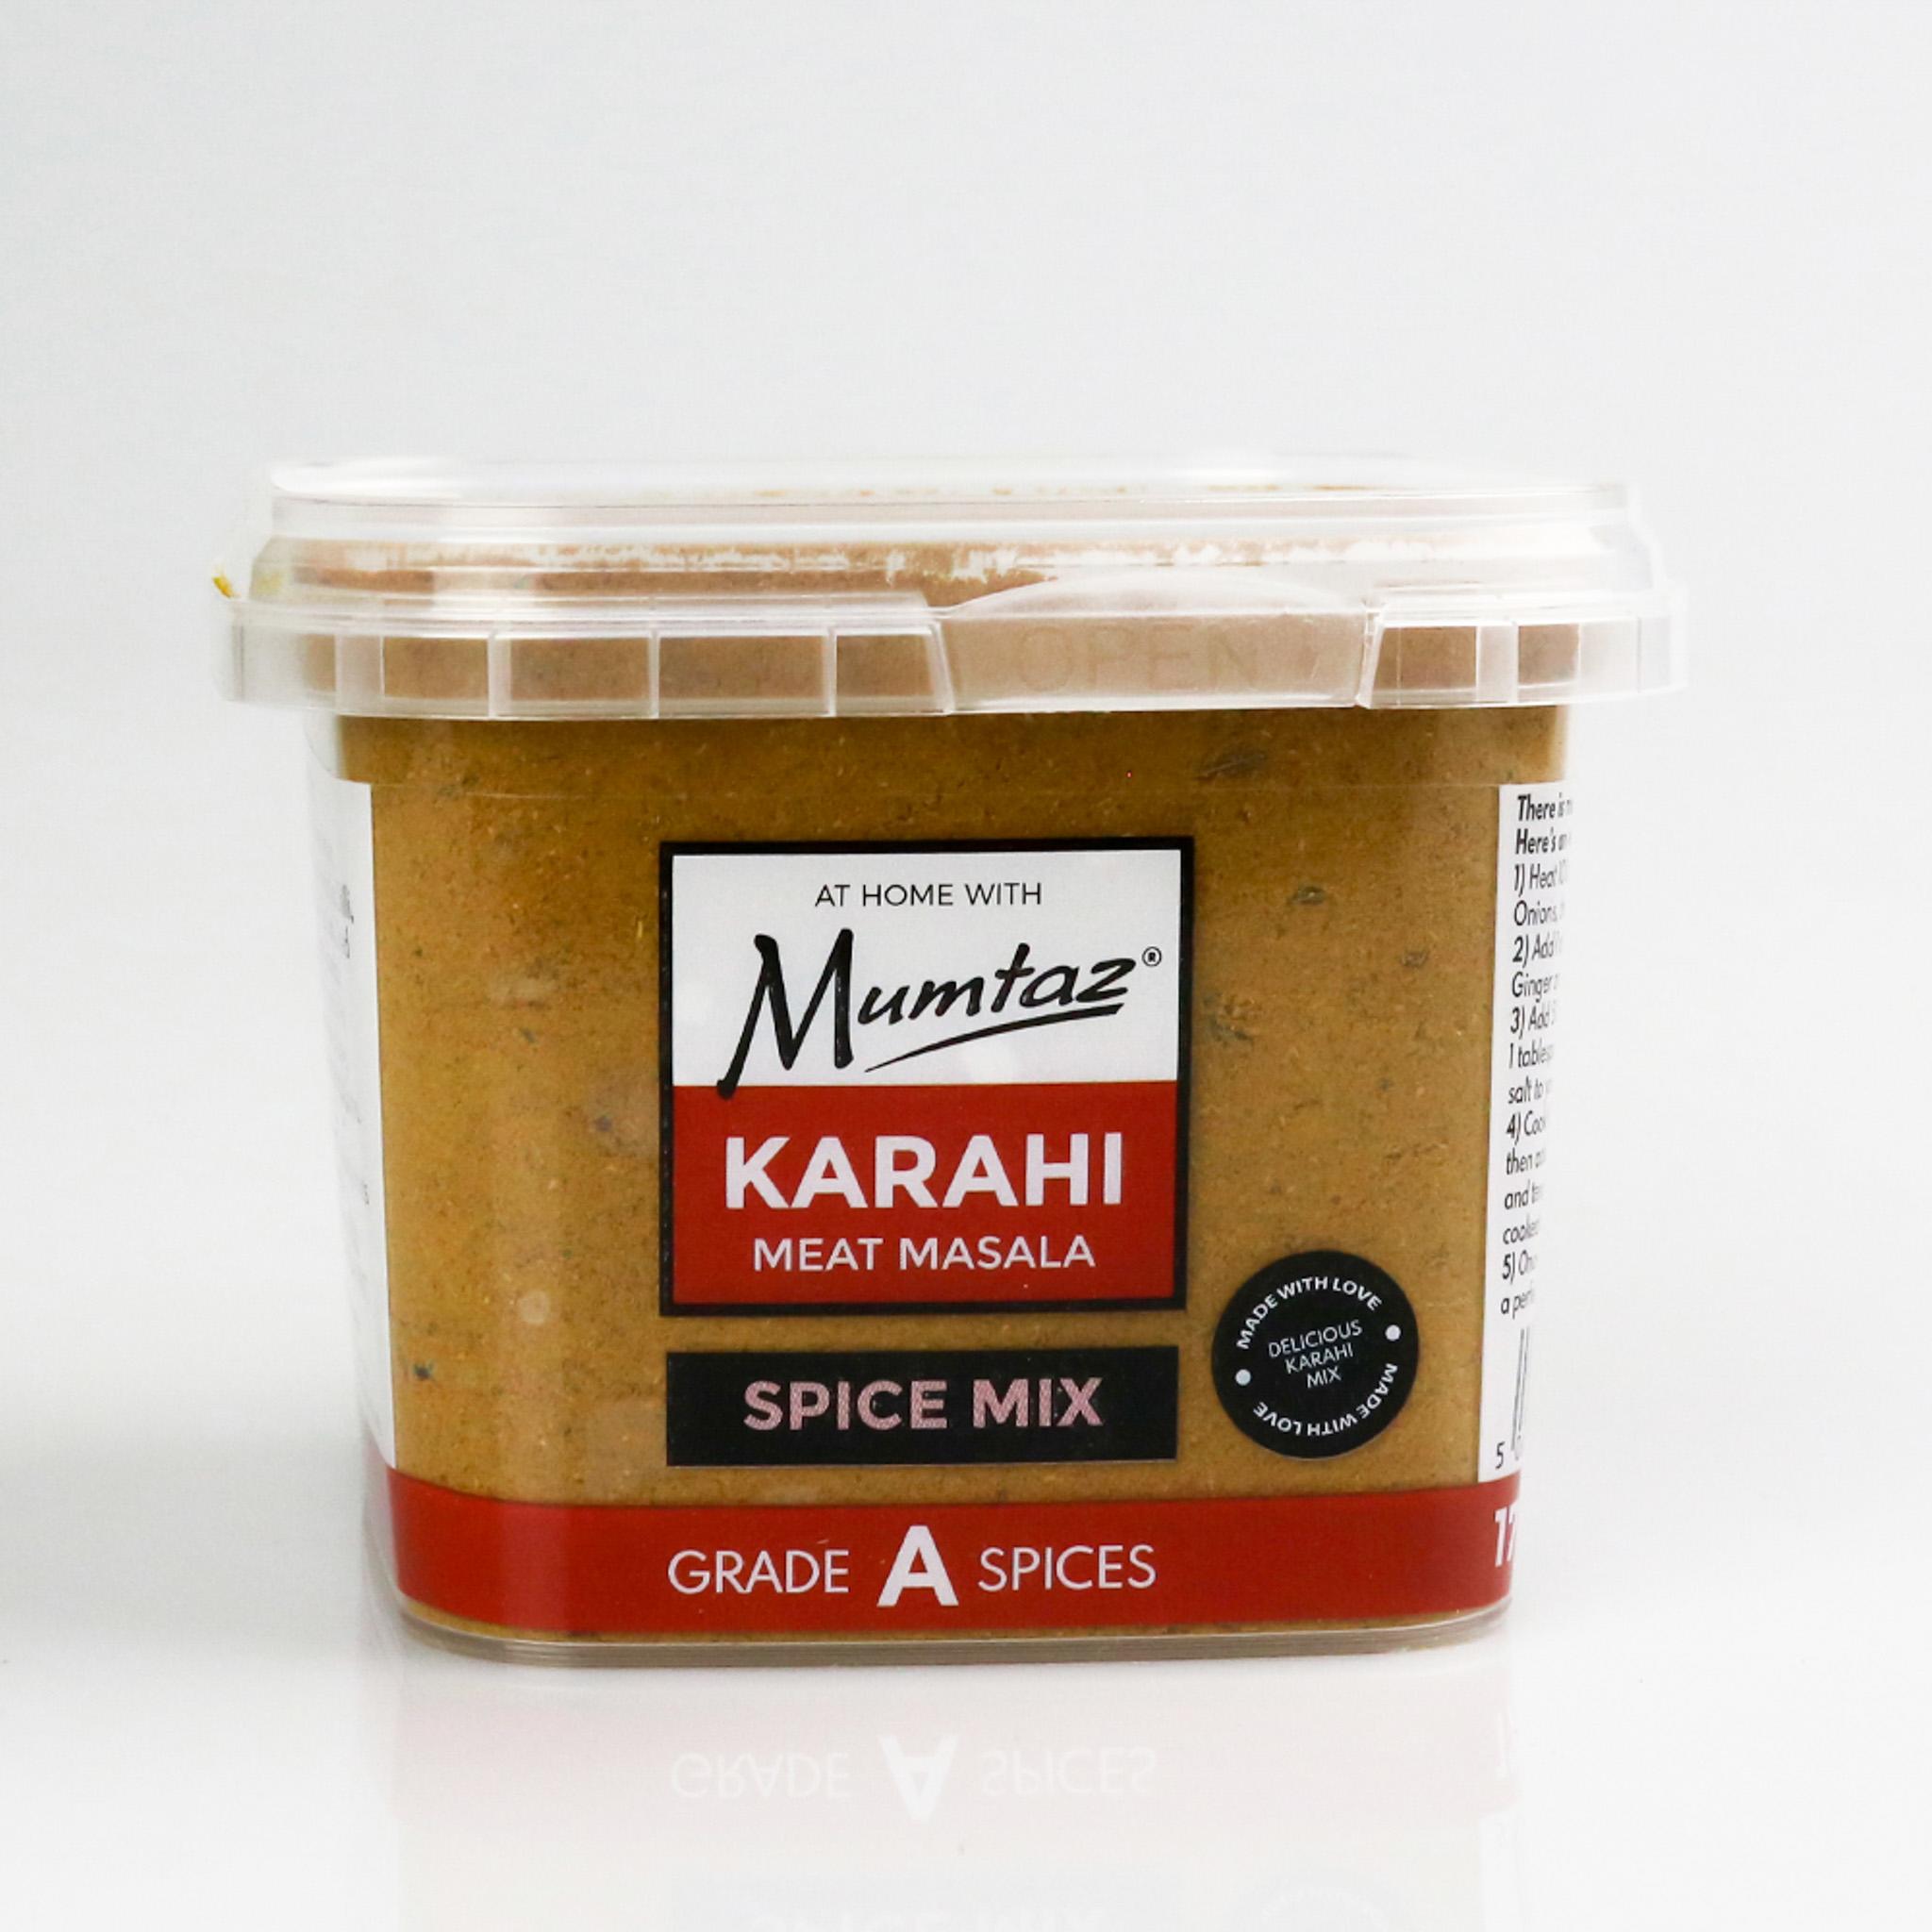 Mumtaz Karahi Meat Masala Spice Mix - 175g